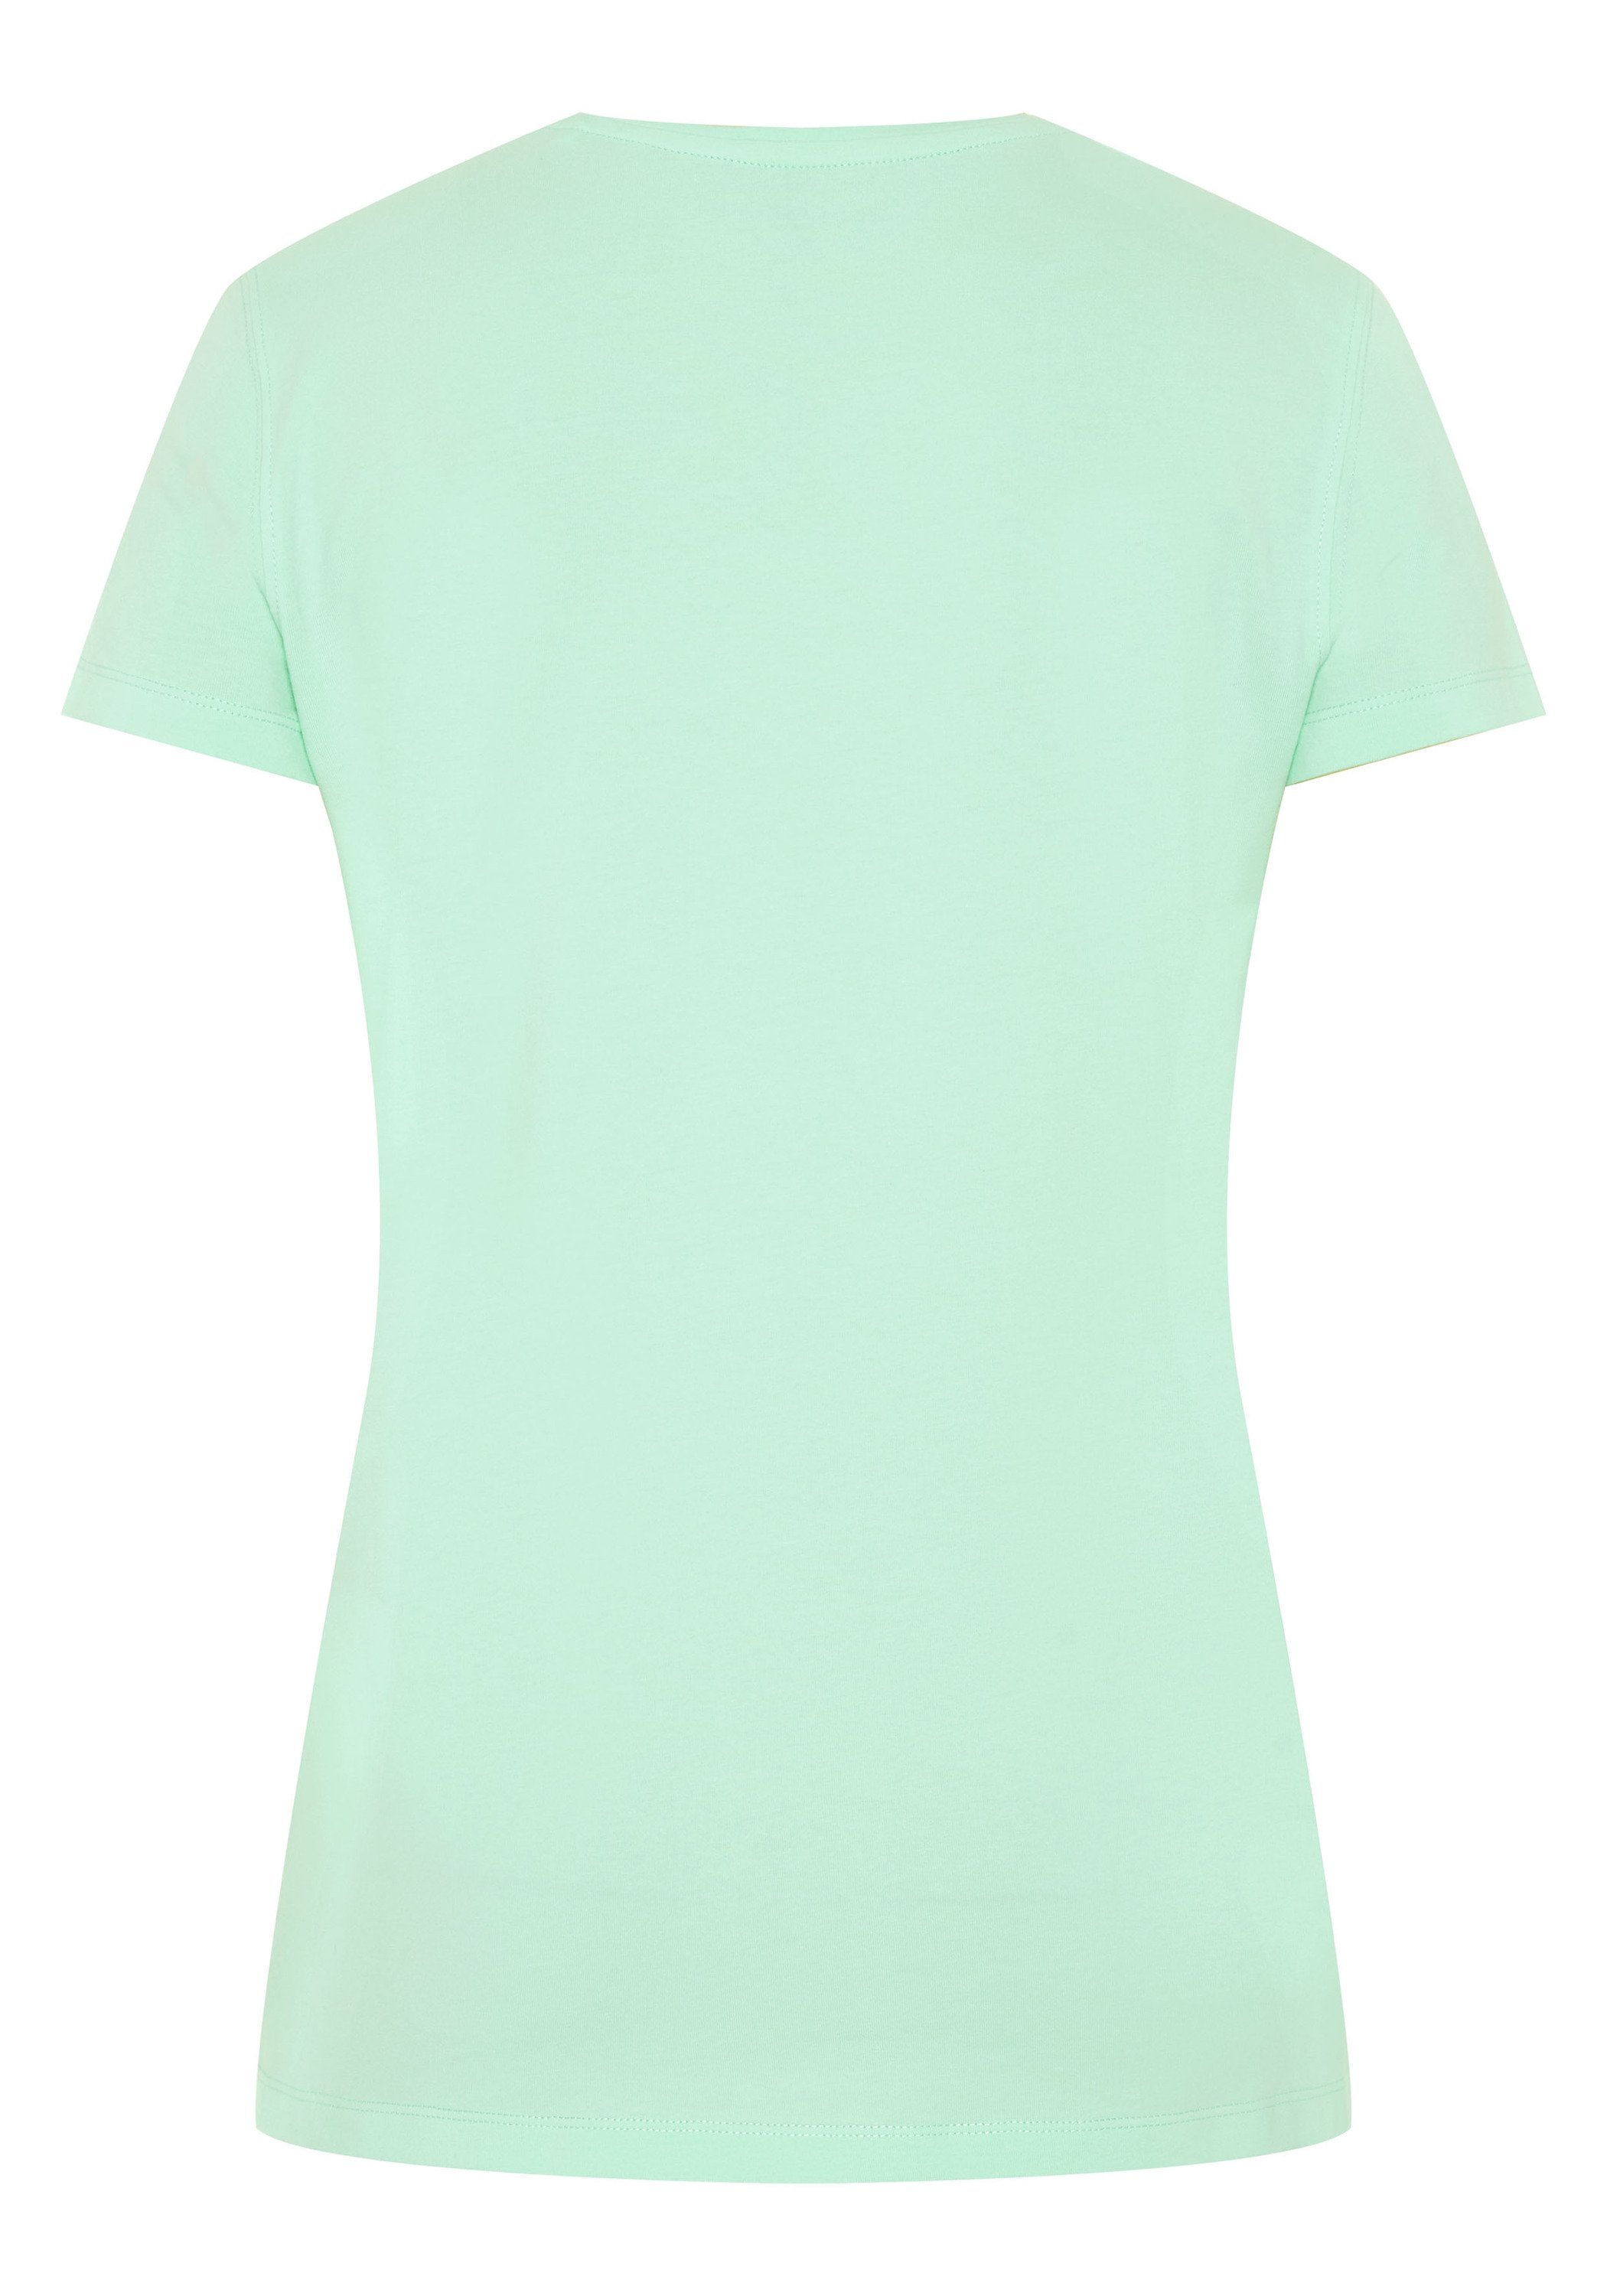 JETTE SPORT Print-Shirt mit Logo-Pigment-Print Beach Glass 13-5412